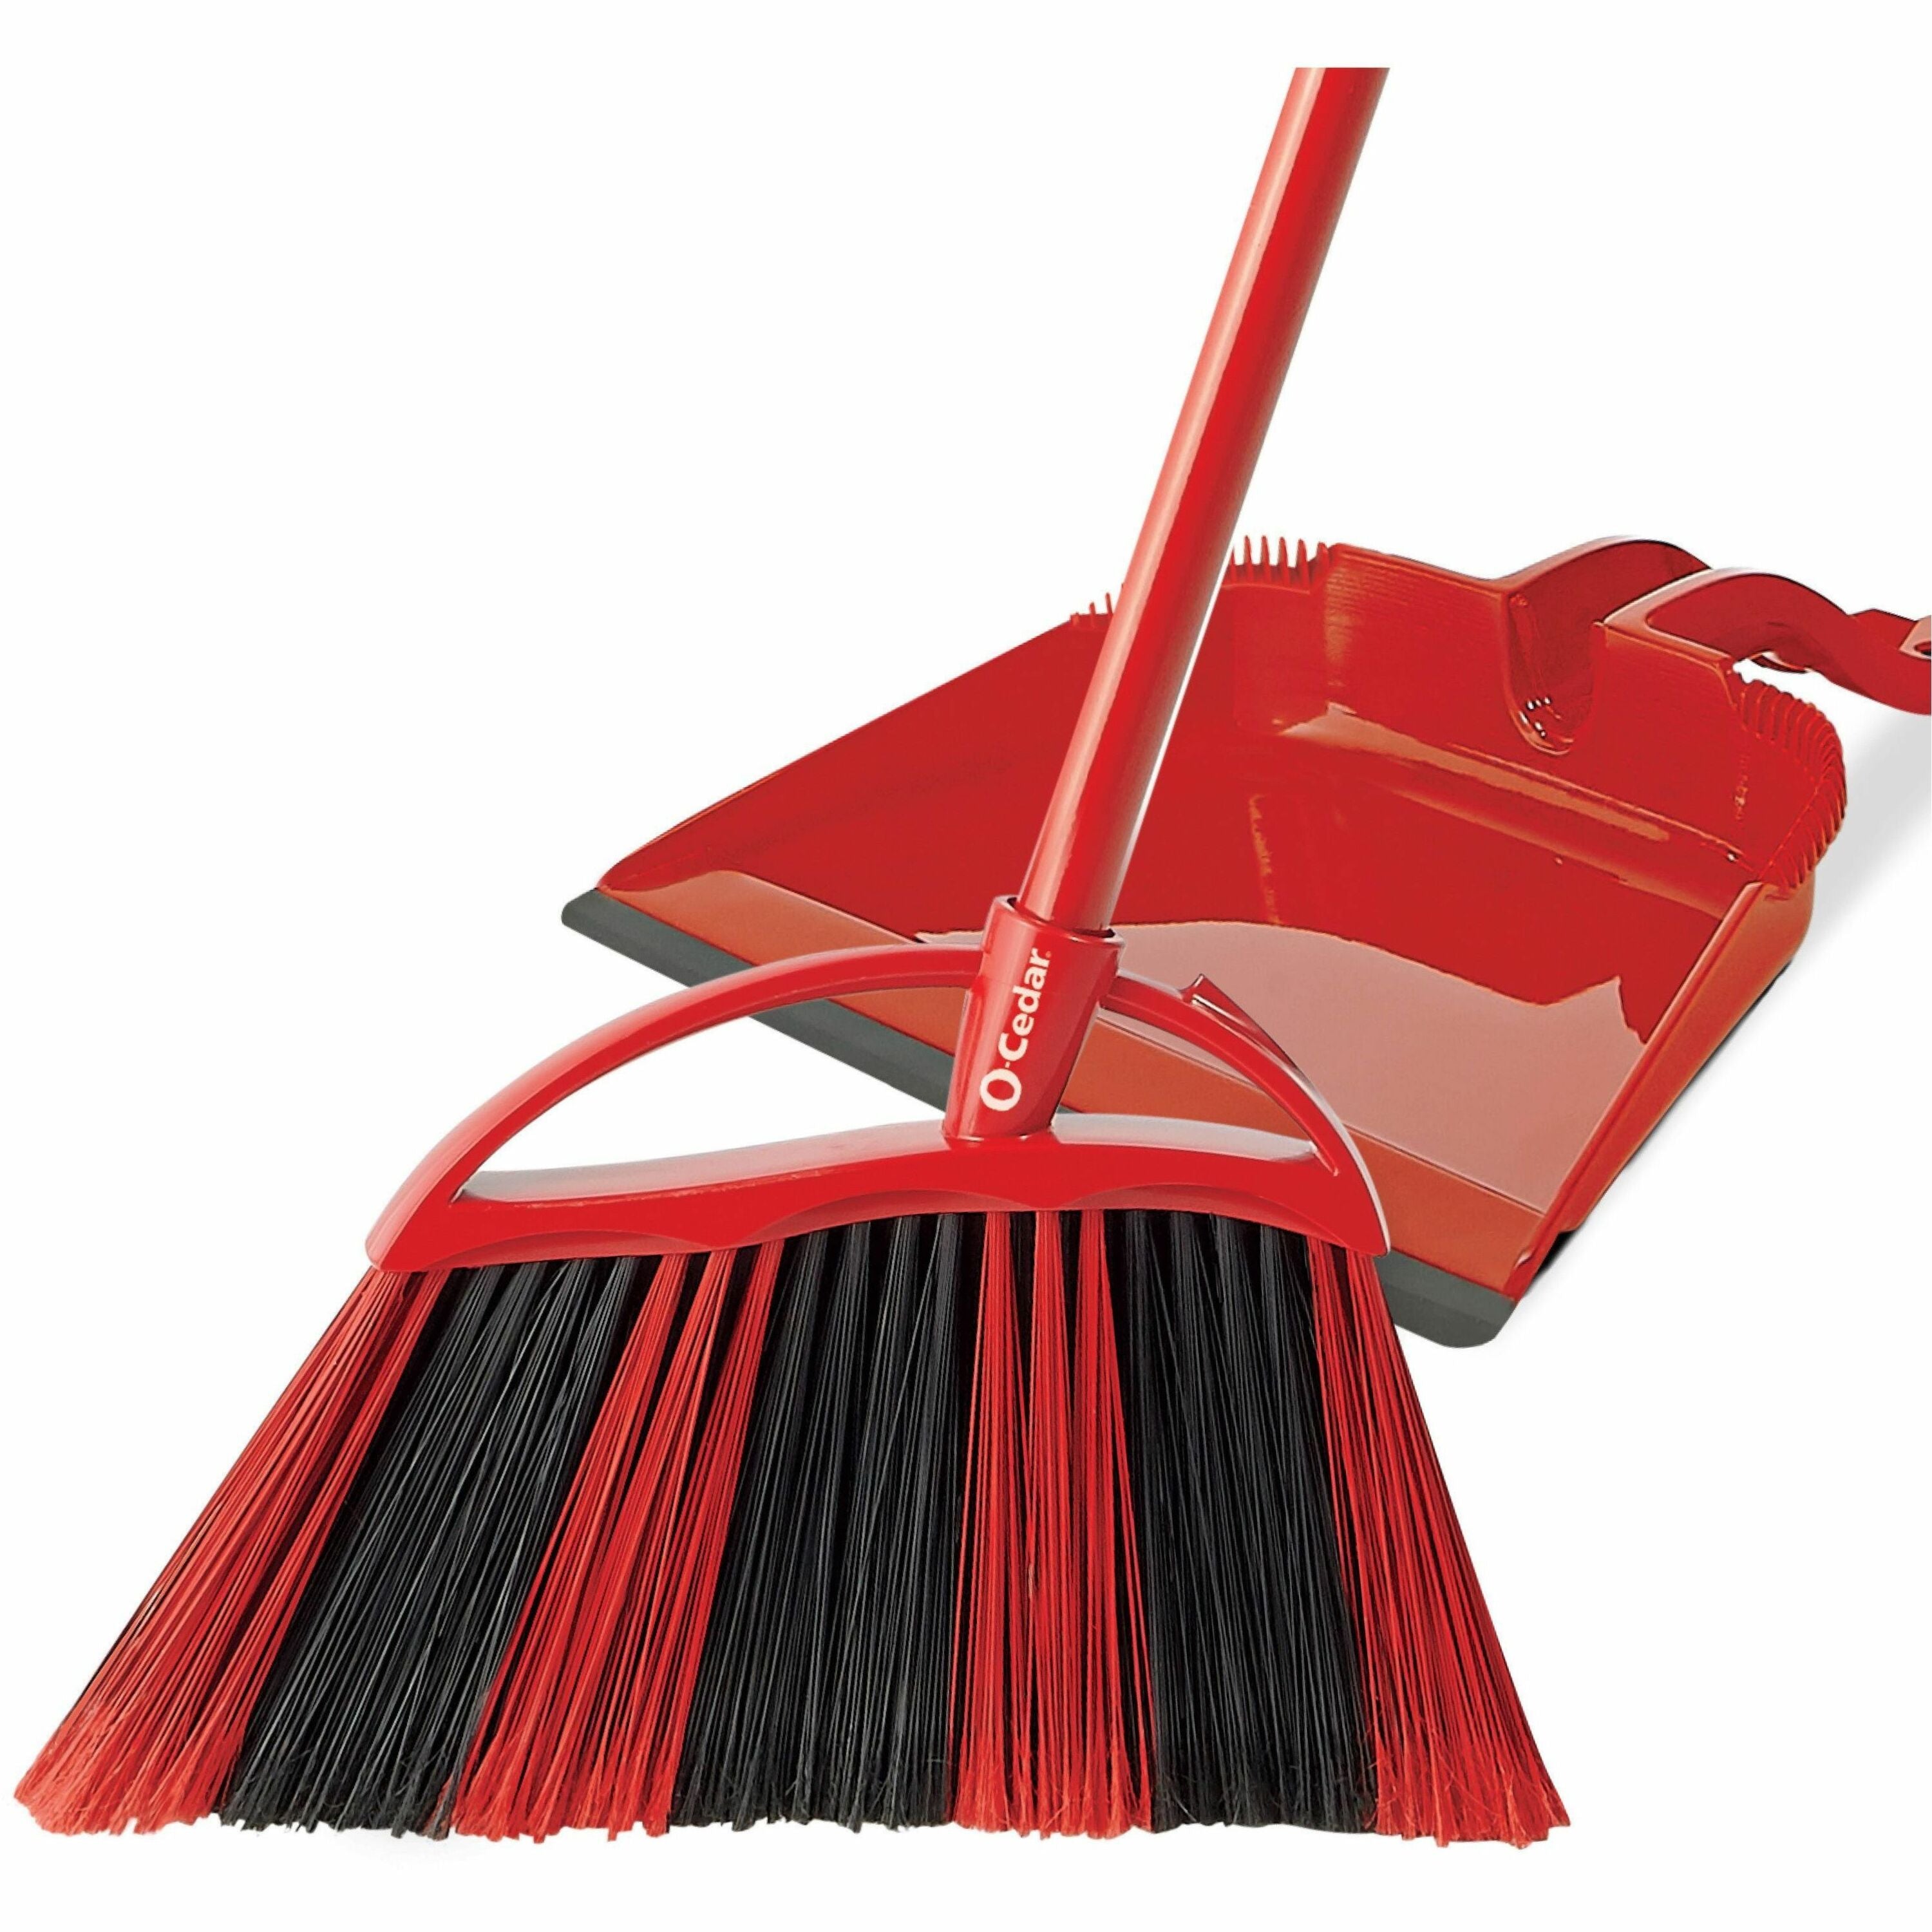 o-cedar-powercorner-one-sweep-broom-1-each-red-black-gray_fhp172134 - 1